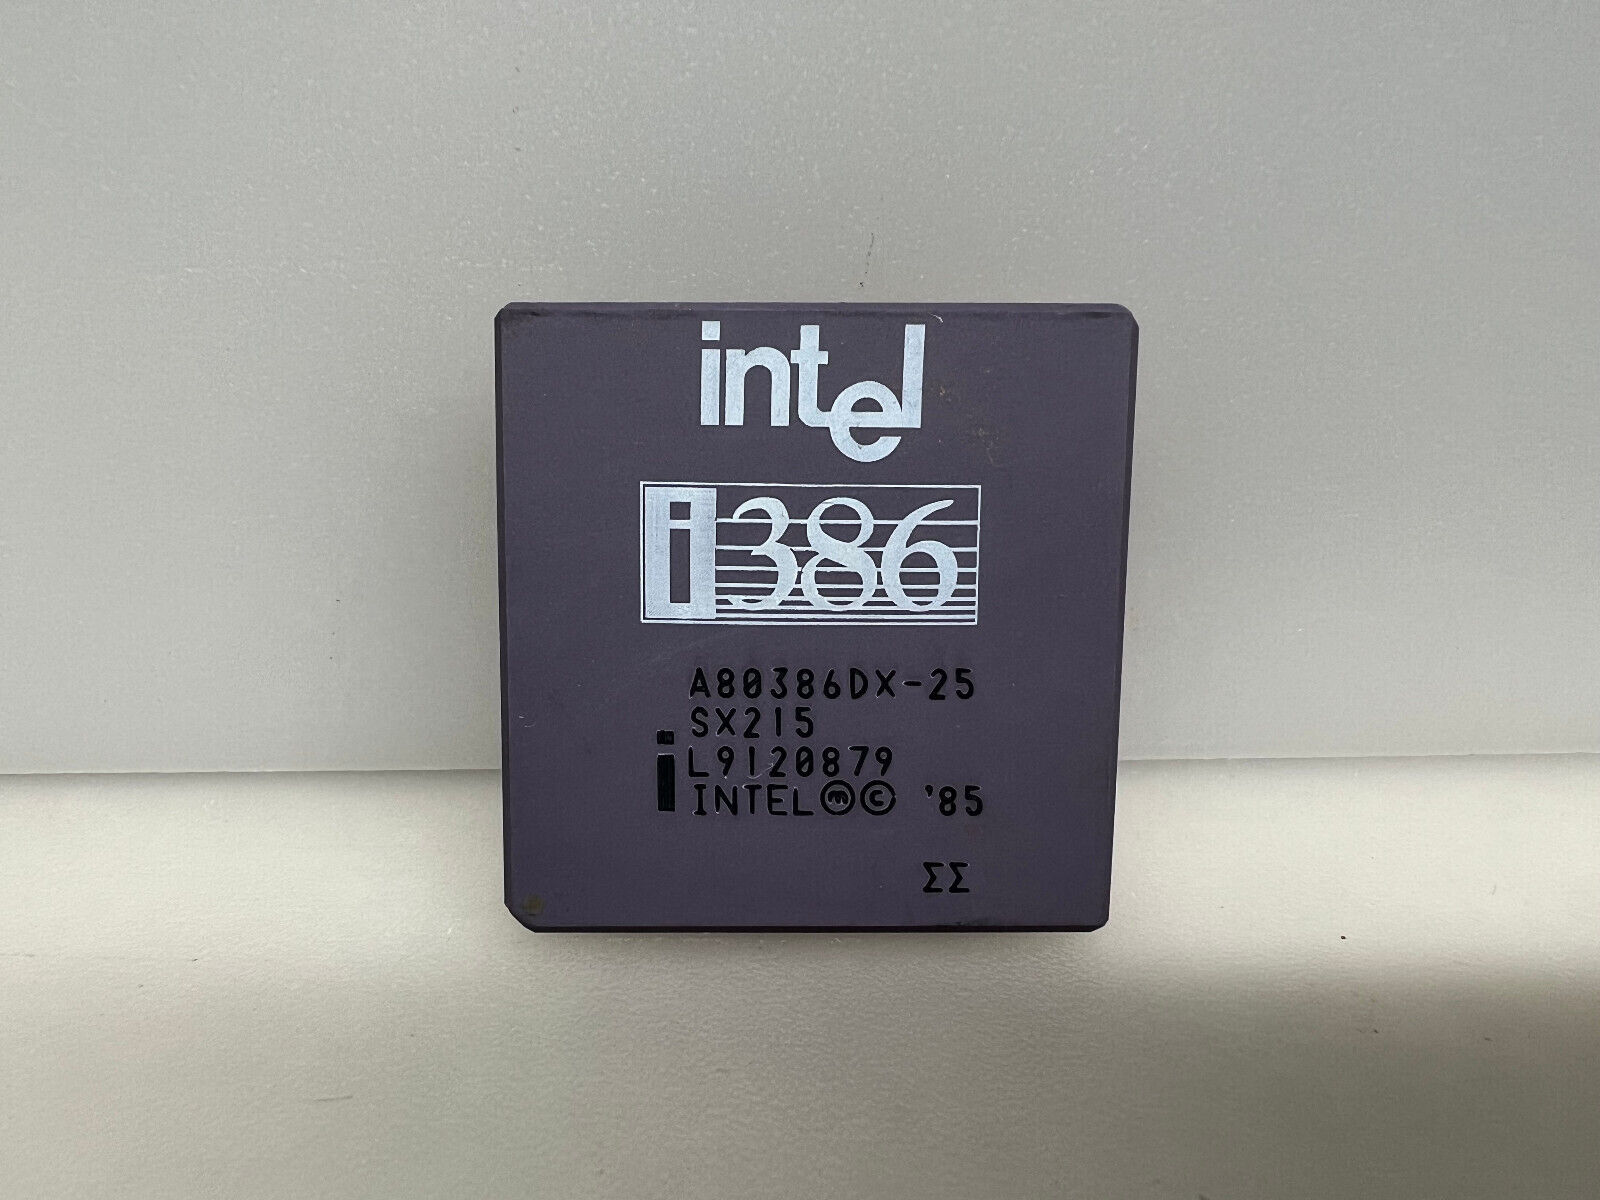 Intel i386 DX-25 CPU 